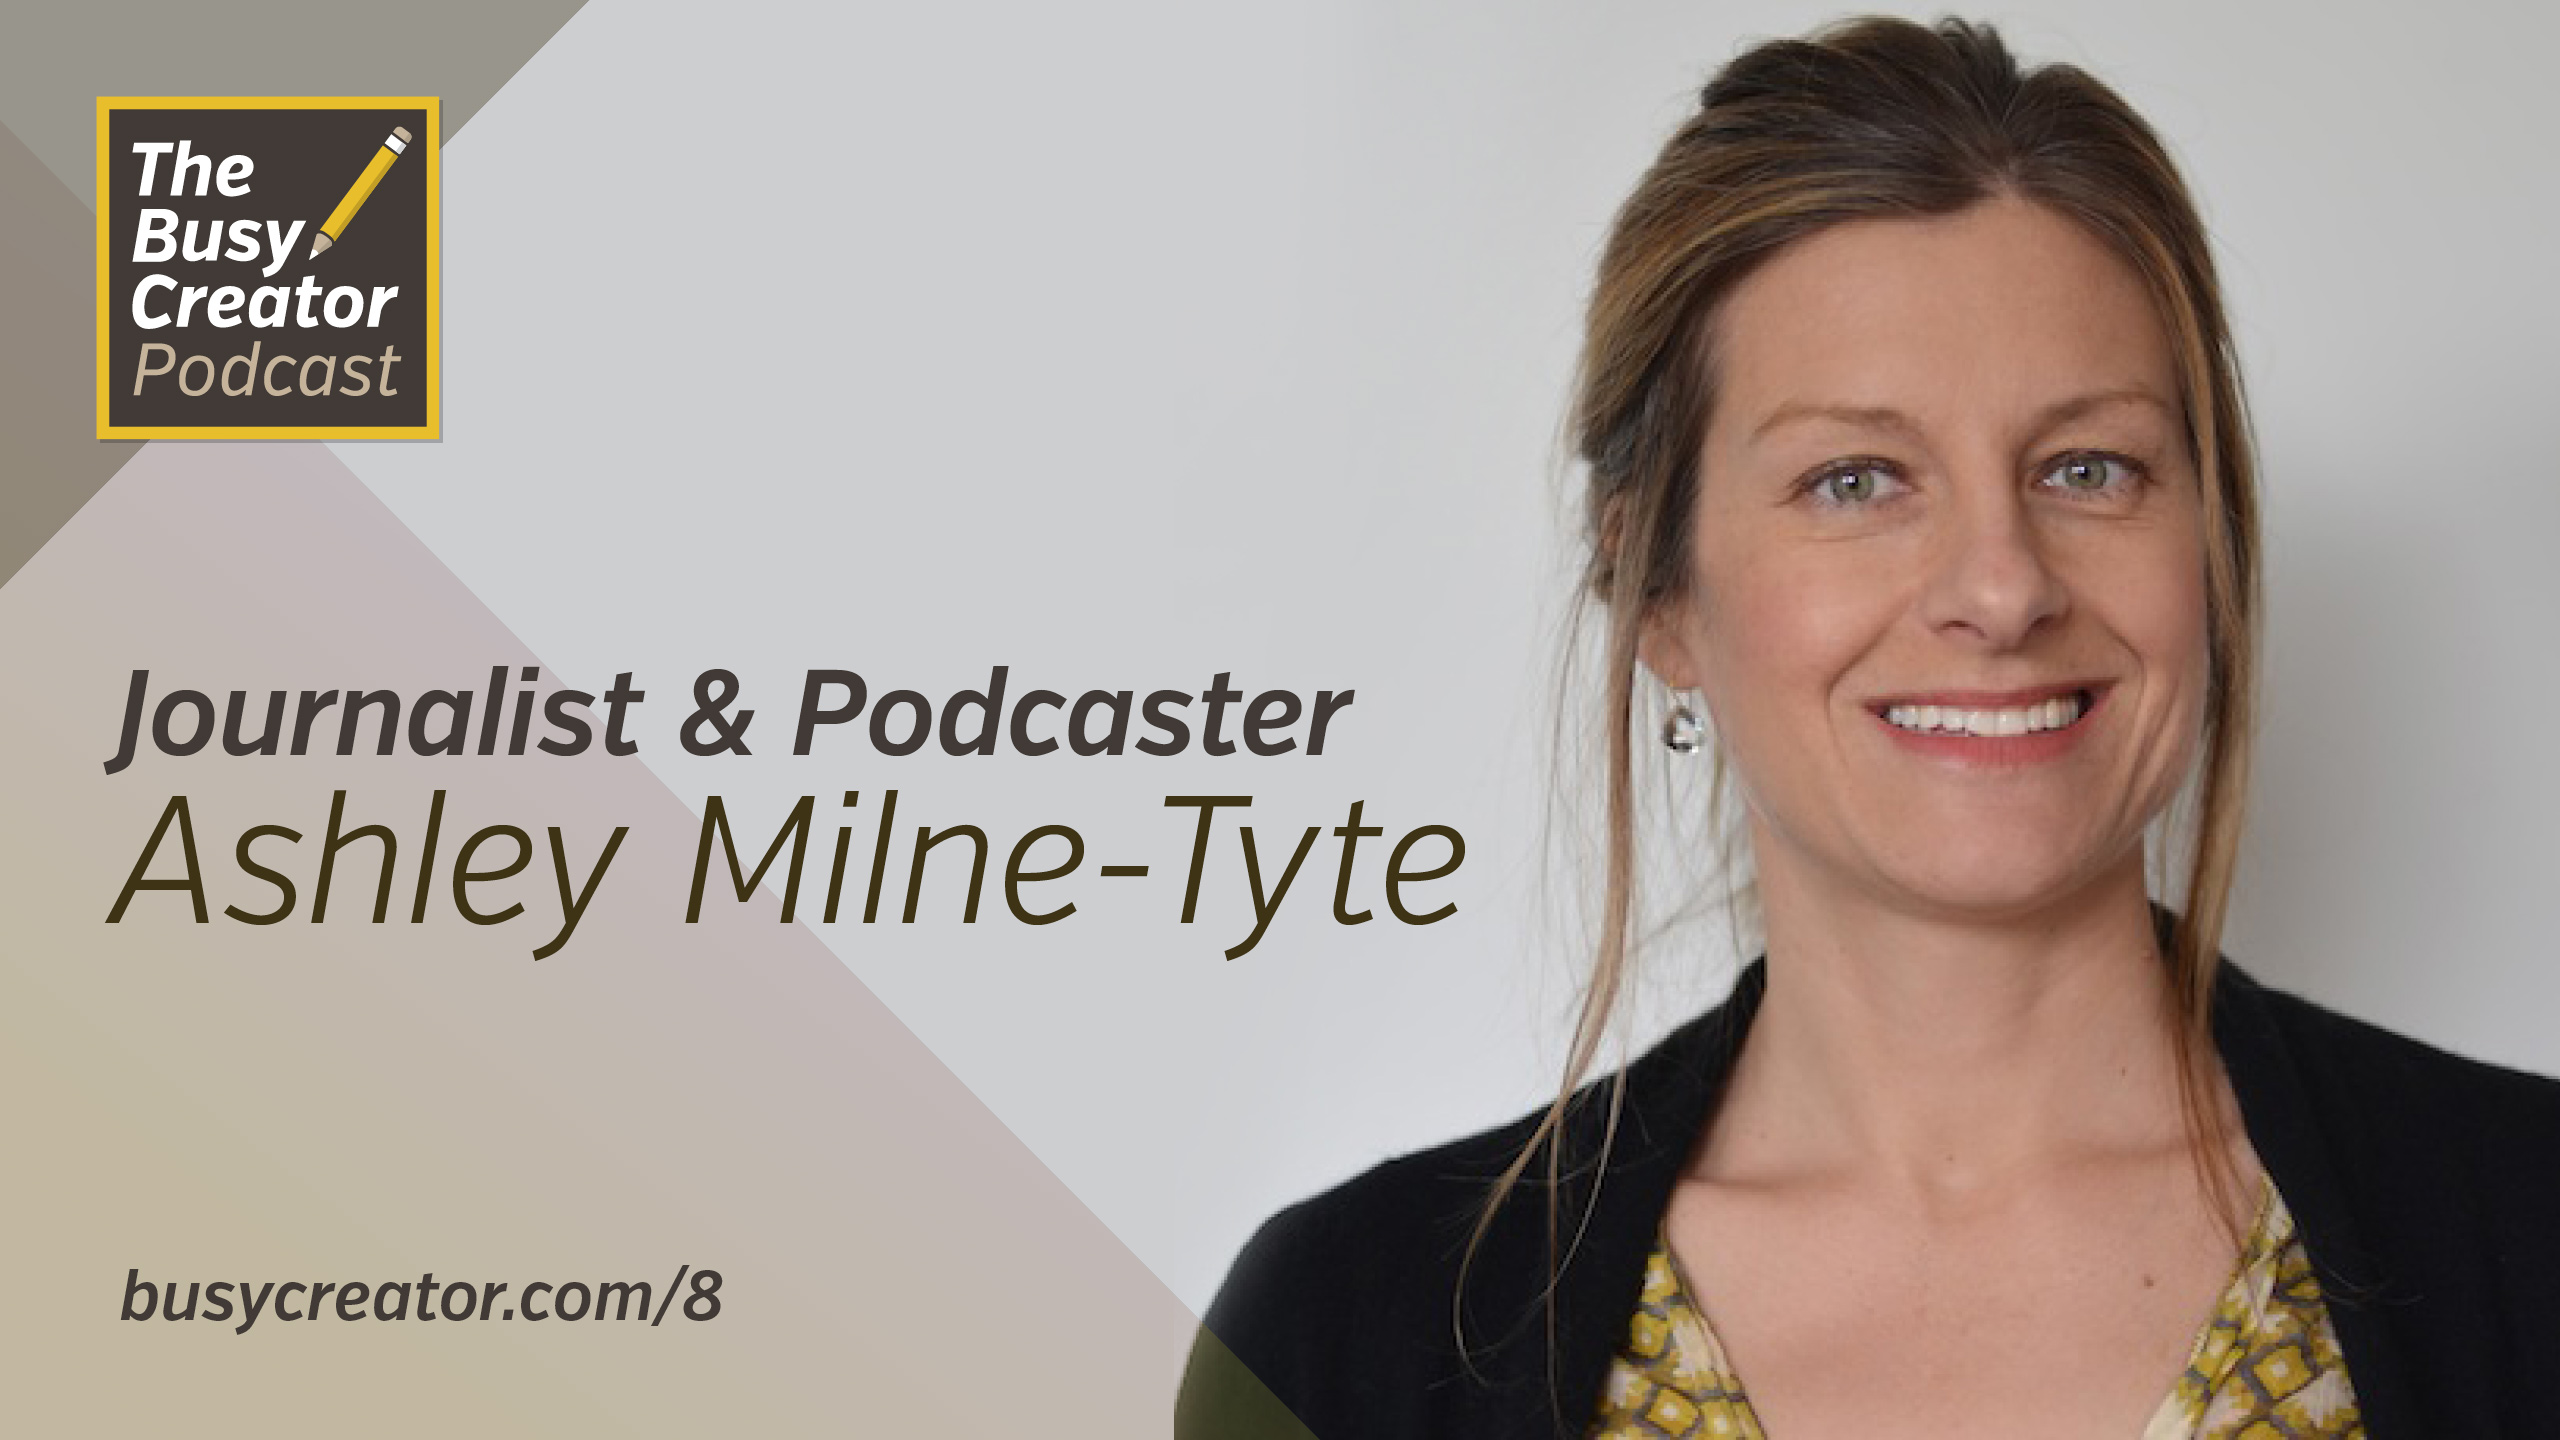 Journalist & Podcaster Ashley Milne-Tyte Talks Methods, Tools for Creative Vivid Audio Stories